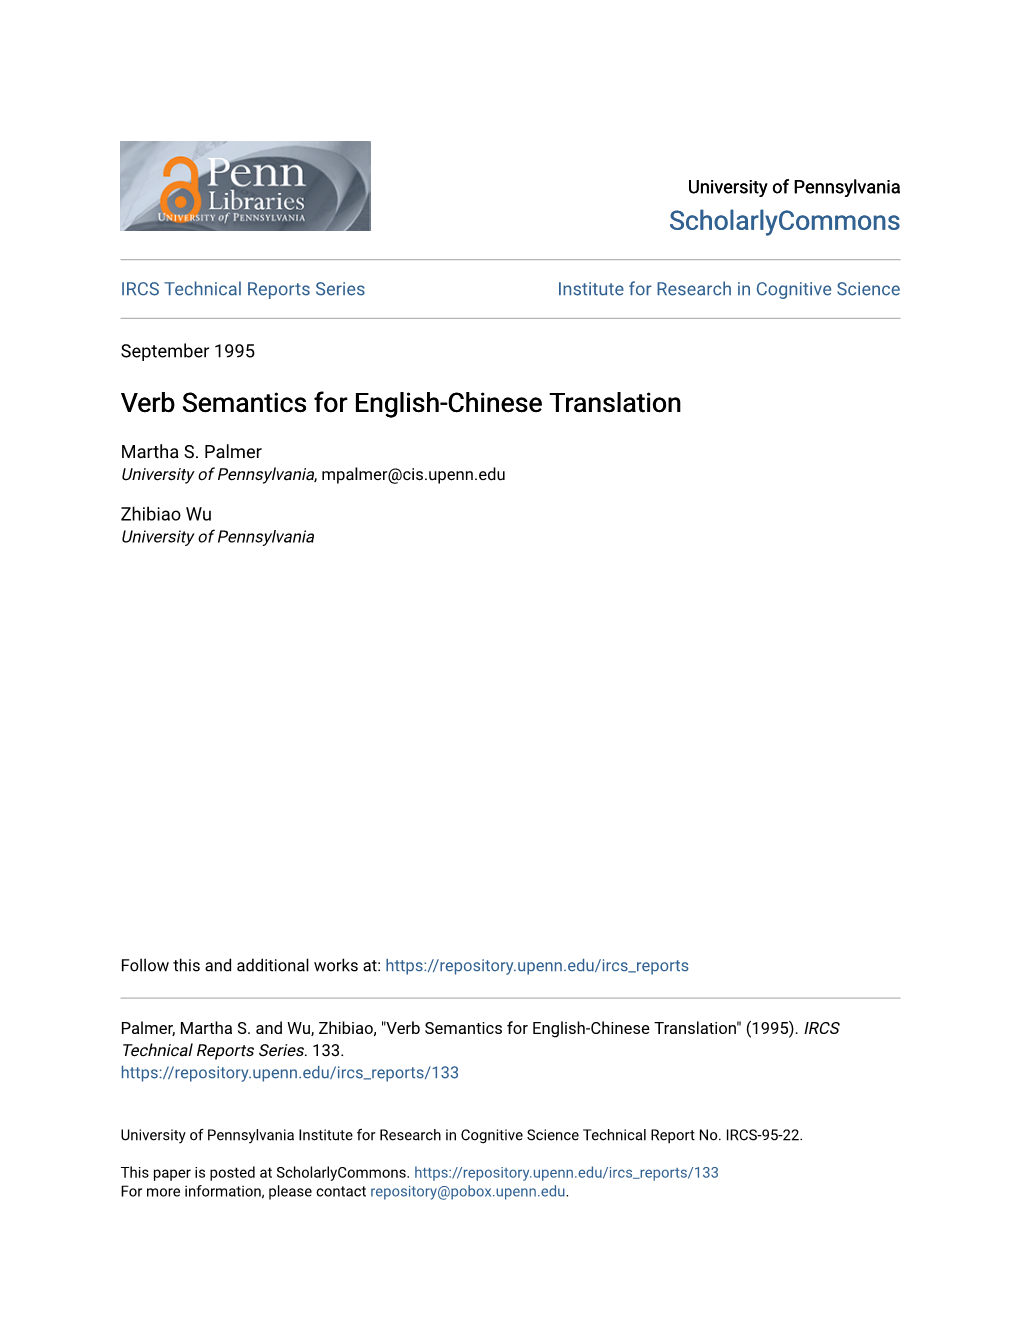 Verb Semantics for English-Chinese Translation